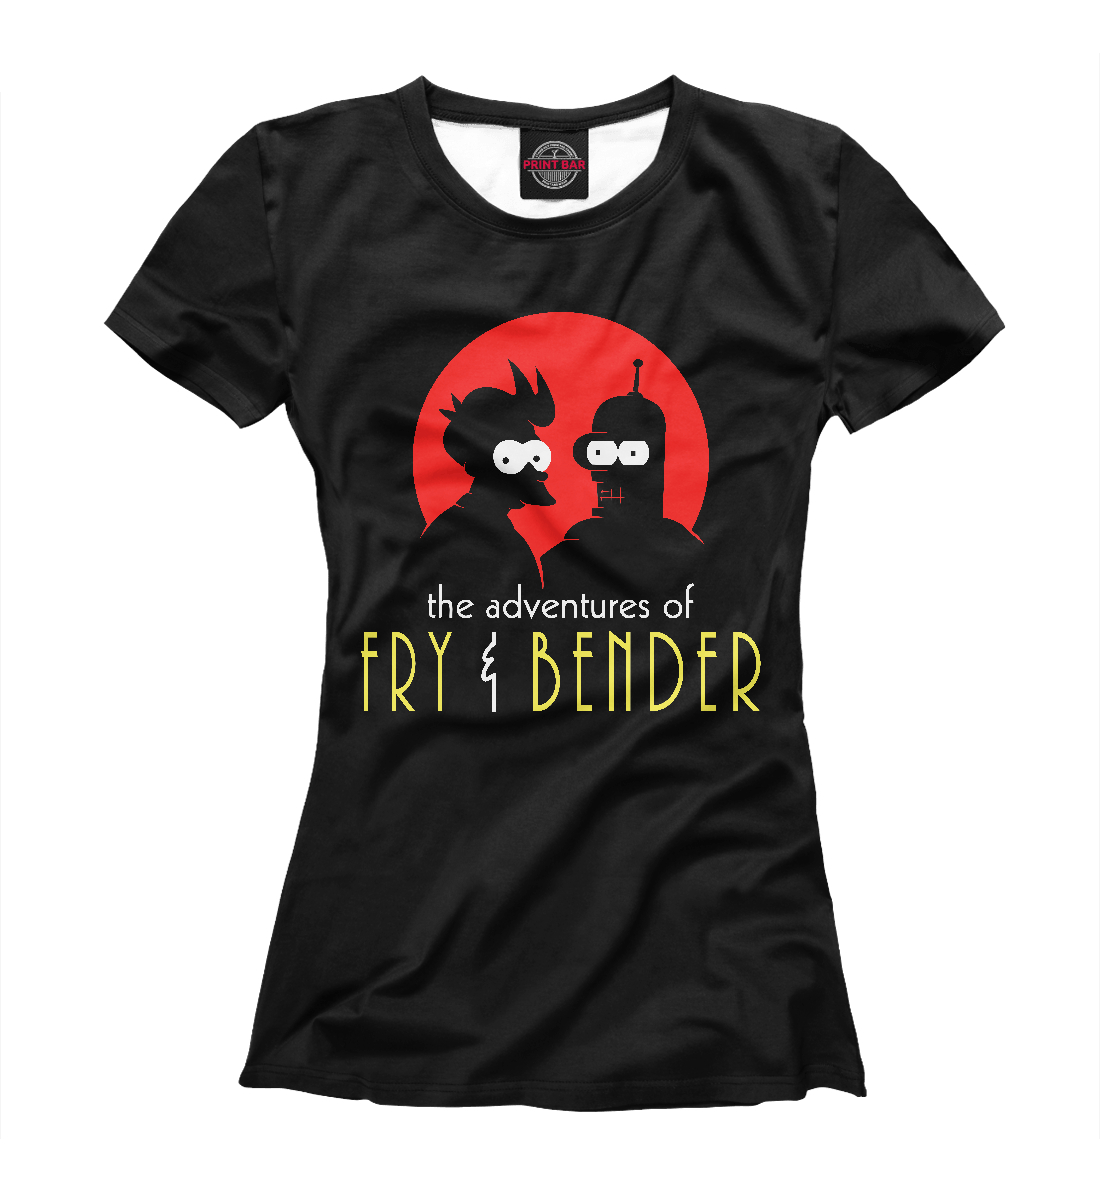 Футболка Fry & Bender для девочек, артикул: FUT-340127-fut-1mp